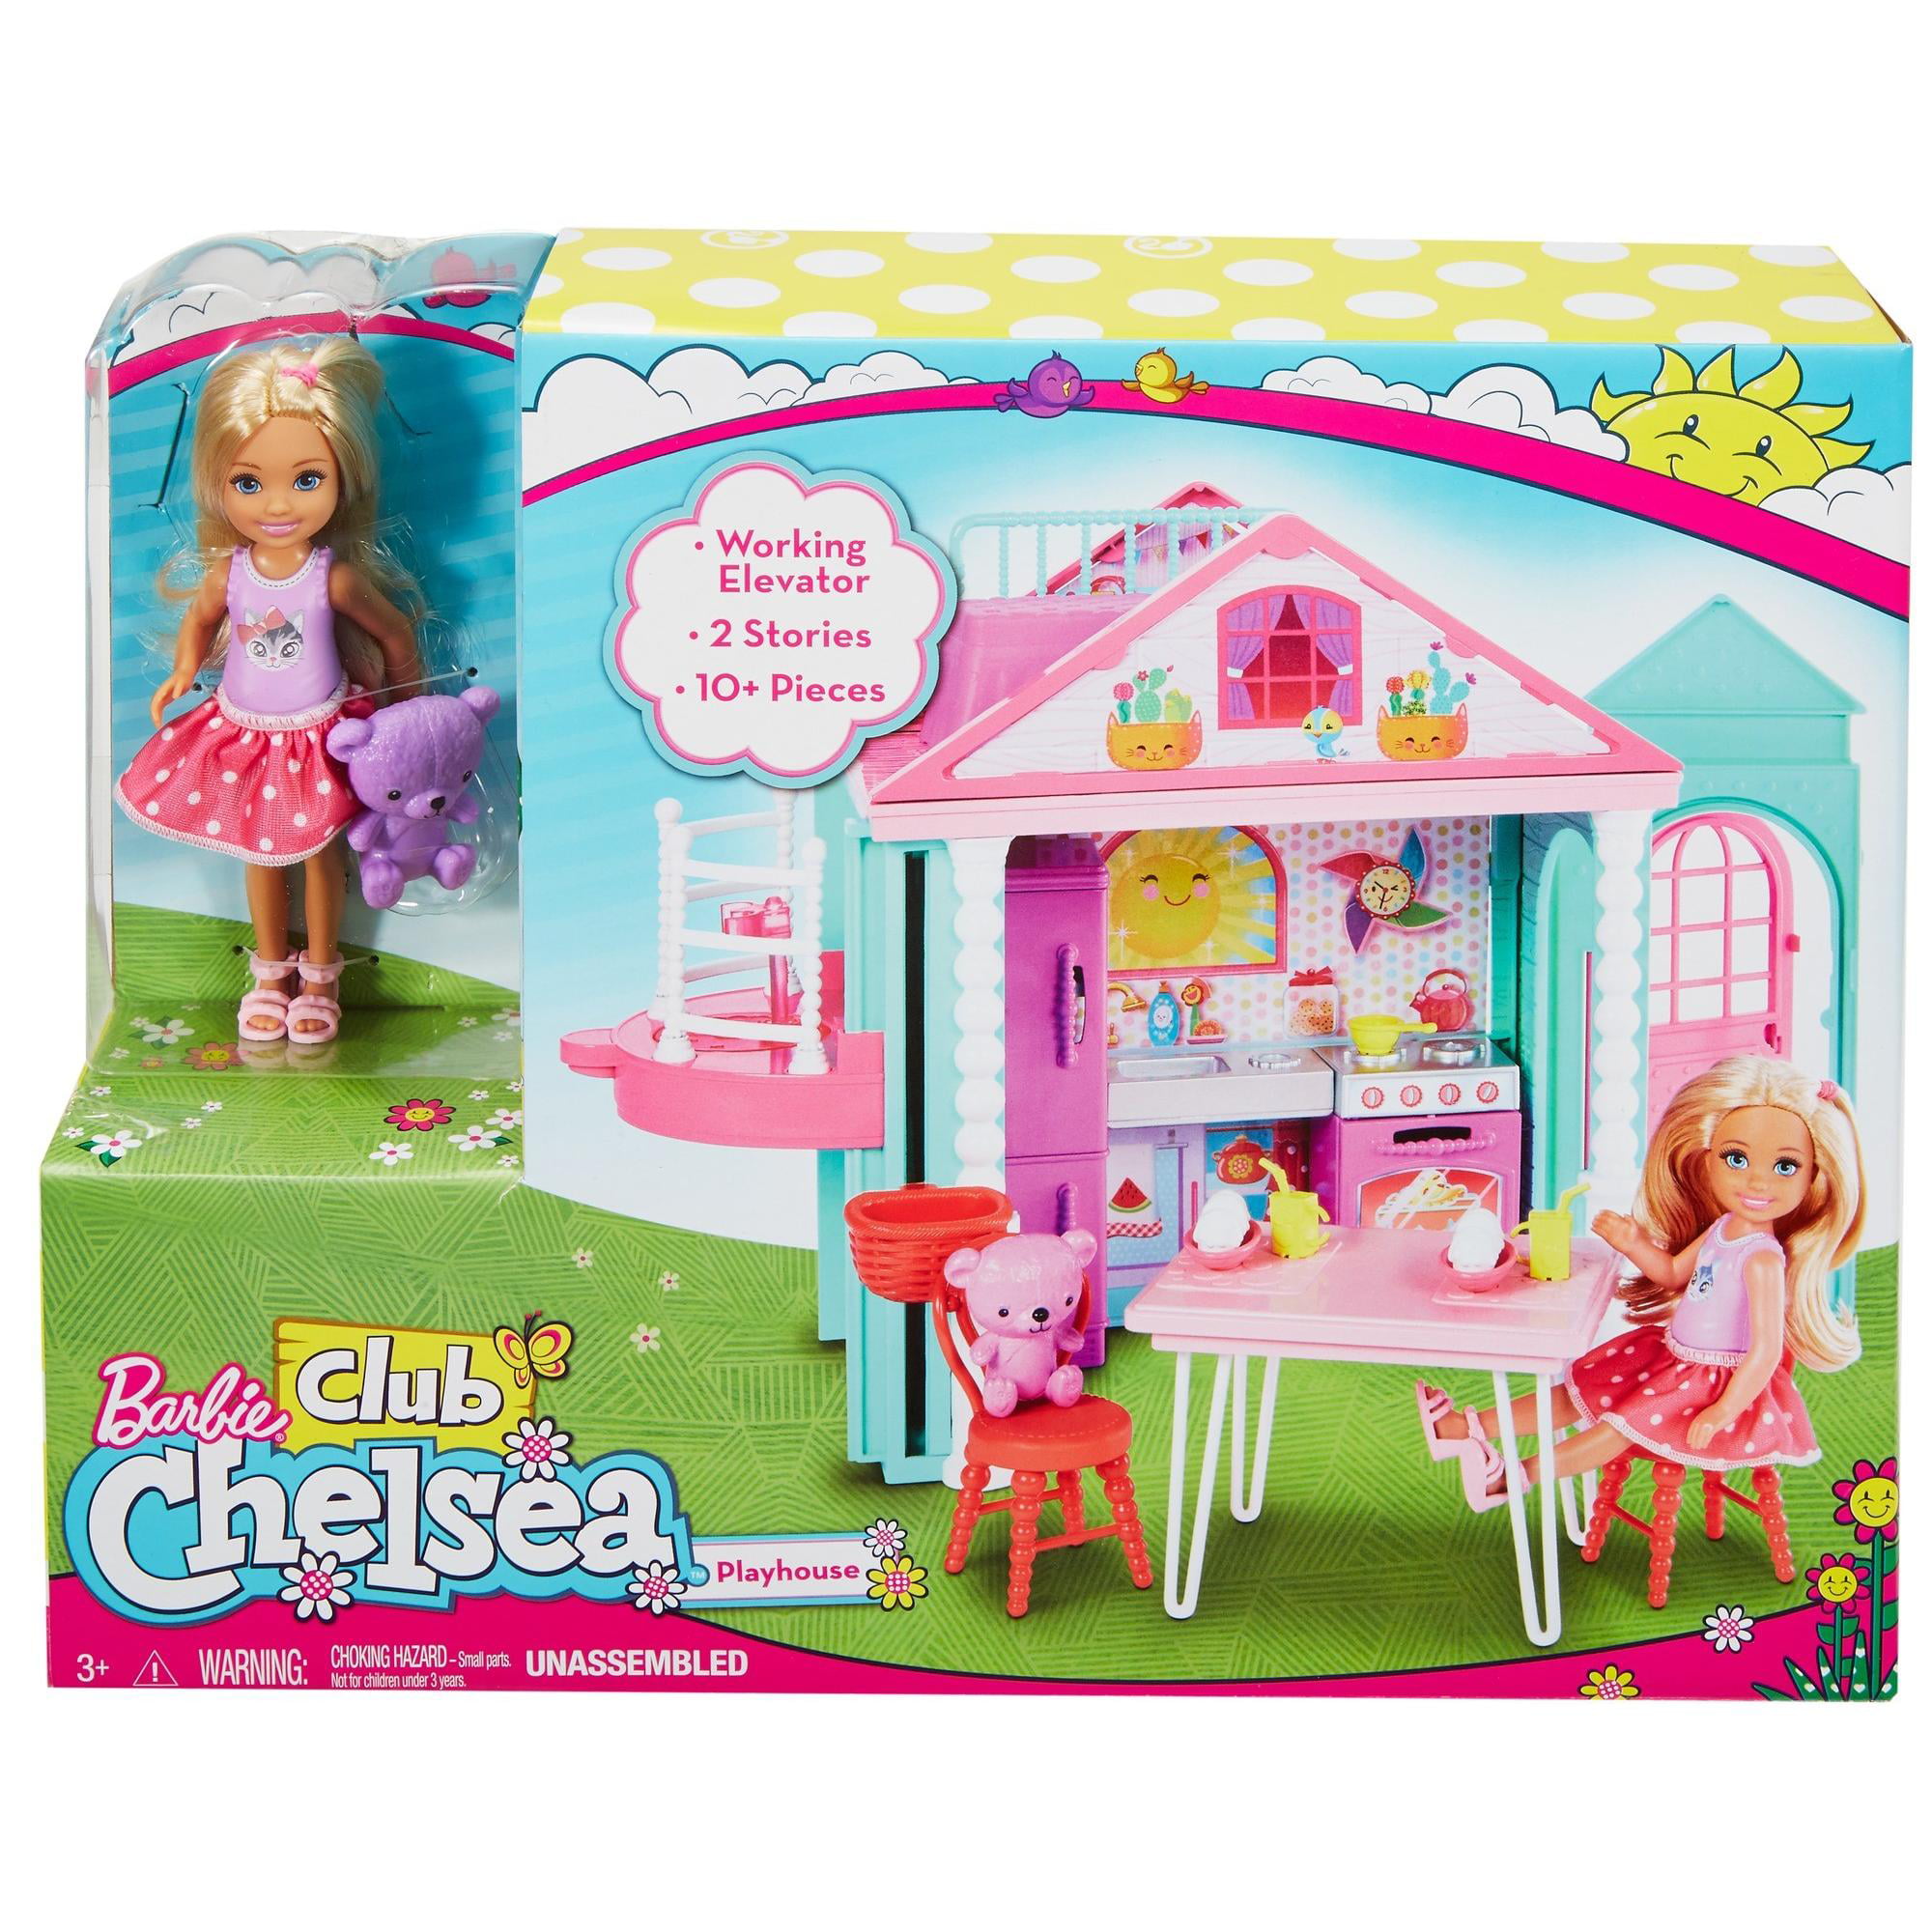 Barbie Club Chelsea Playhouse, 2-Story 